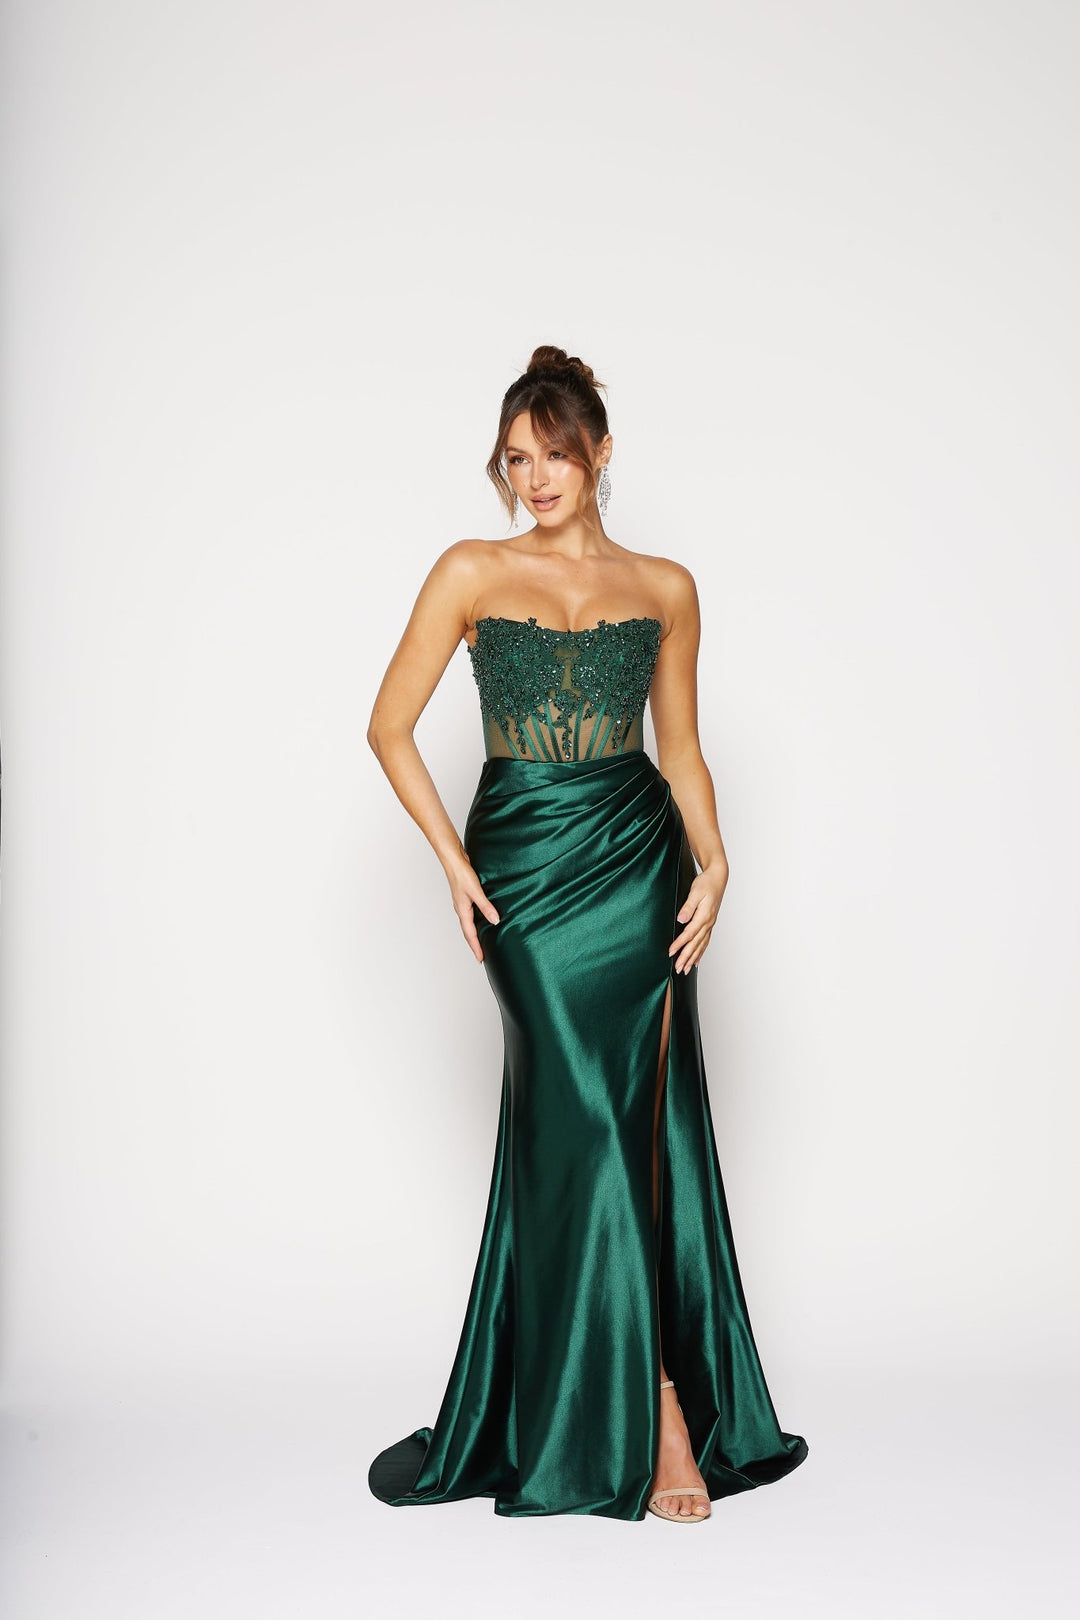 Ondine Dress by Tania Olsen PO2444 - ElissaJay Boutique